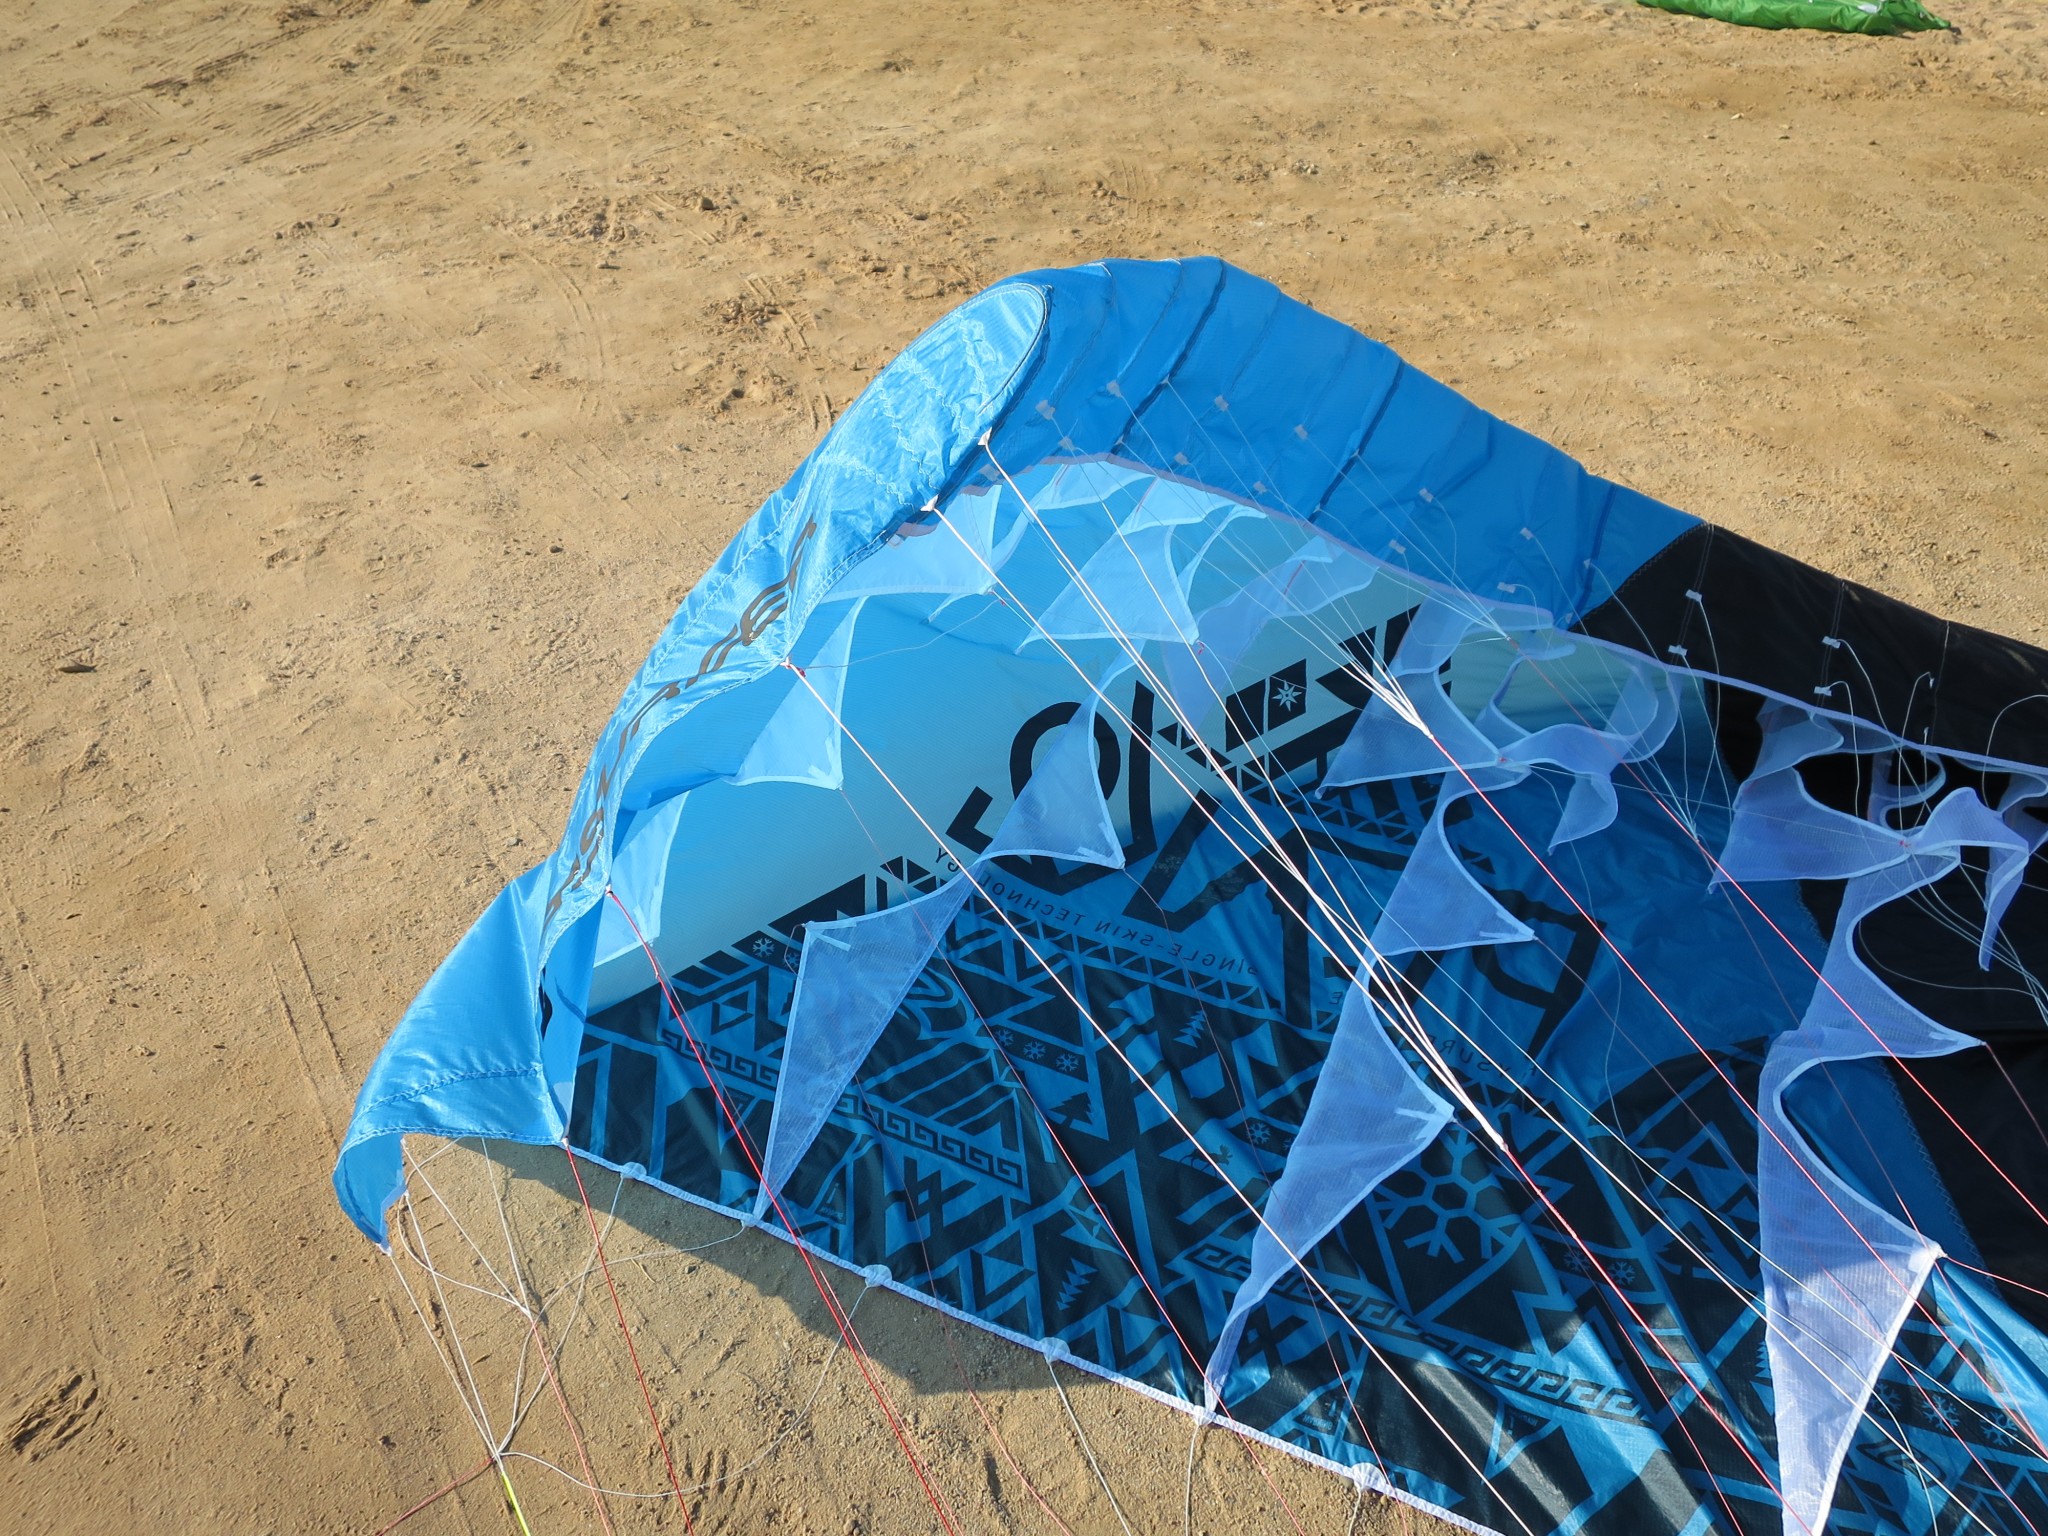 Flysurfer Peak2 2015 Kitesurfing Reviews Kites | Free Kitesurfing Magazine Online IKSURFMAG